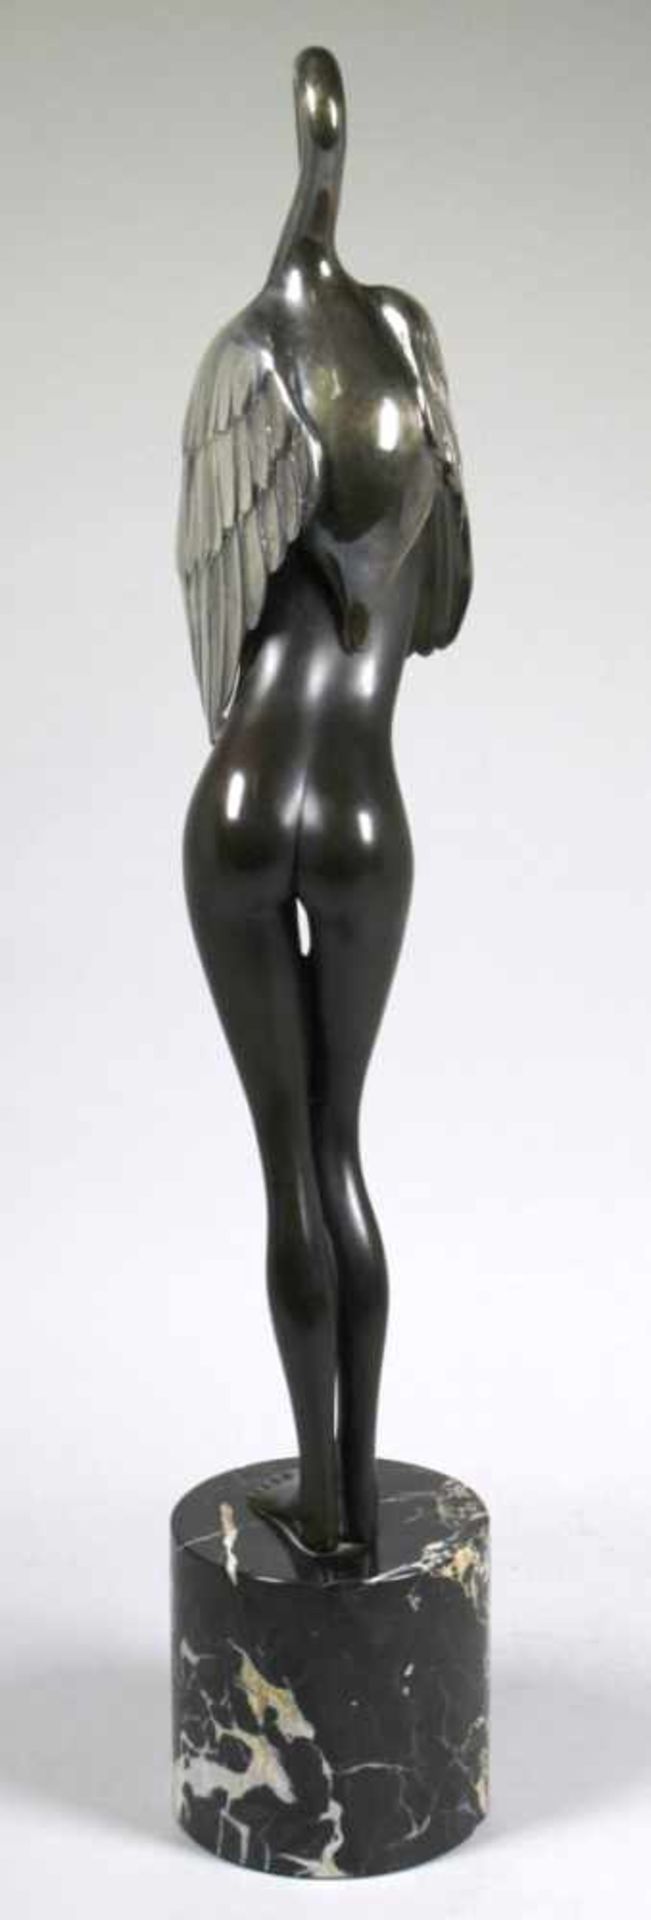 Bronze-Plastik, "Leda", Bruni, Bruno, geb. 1935 in Gradera/Italien, vollplastische, - Bild 2 aus 4